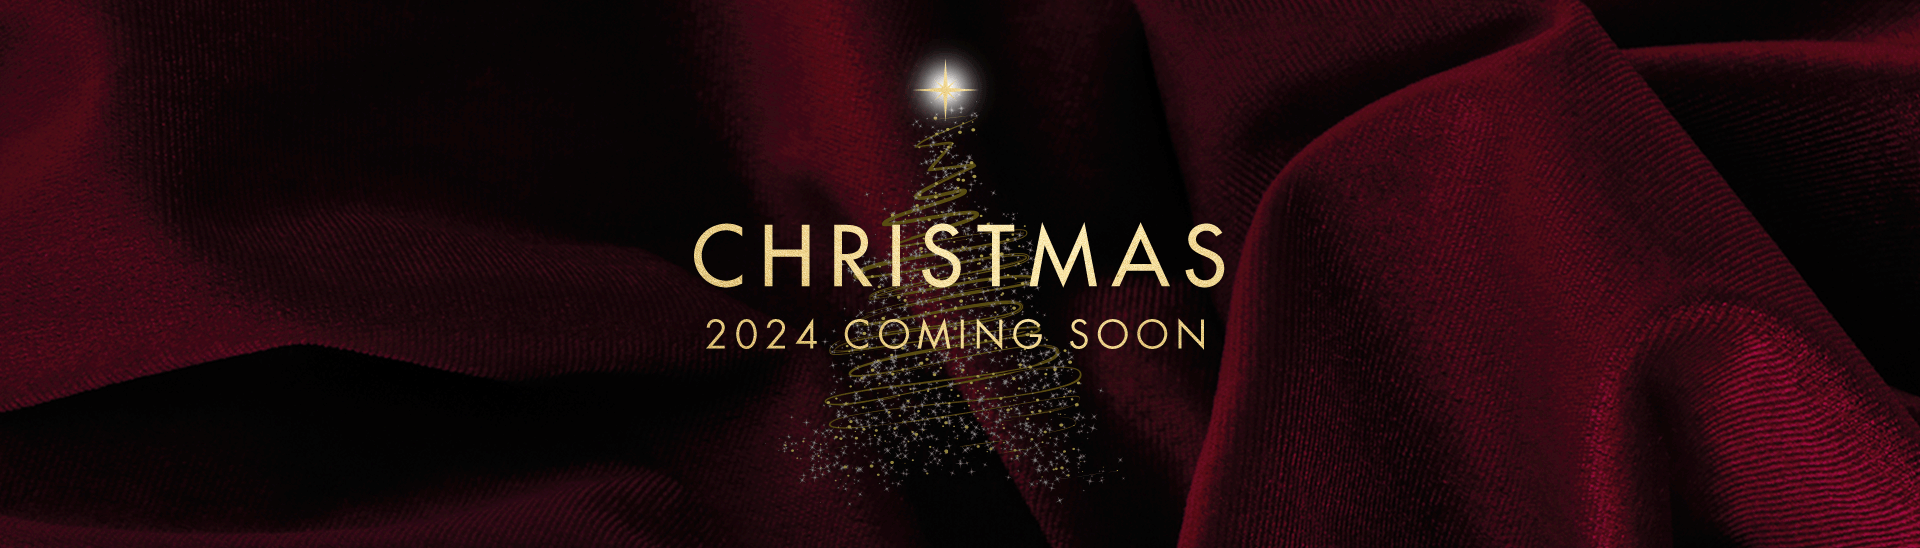 Christmas 2024 at Sevenoaks